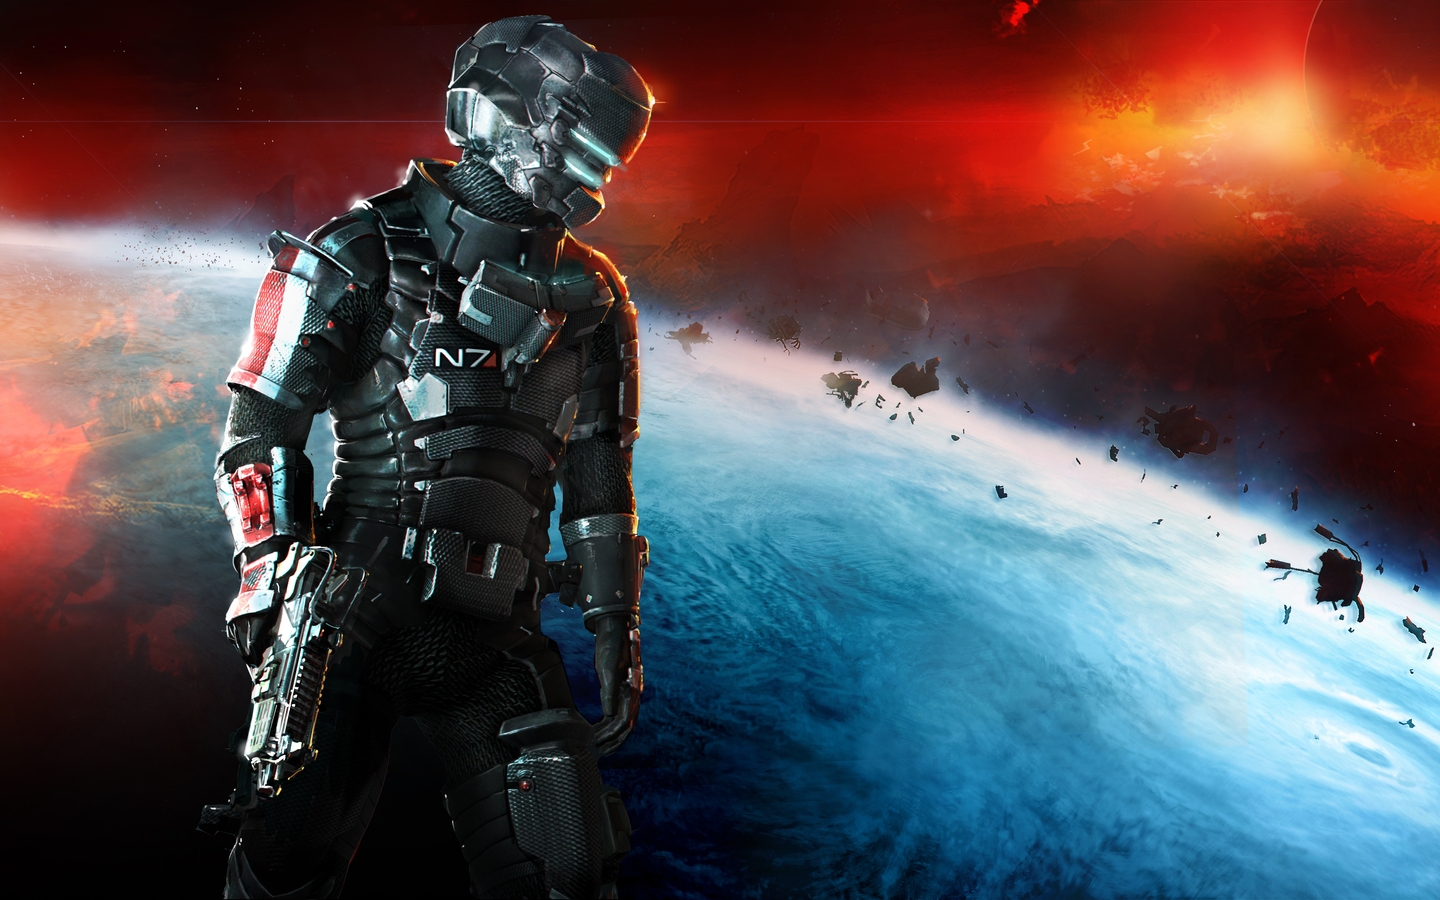 Картинка: Dead Space 2, инженер, Айзек Кларк, N7, костюм, оружие, скафандр, космос, планета, мусор